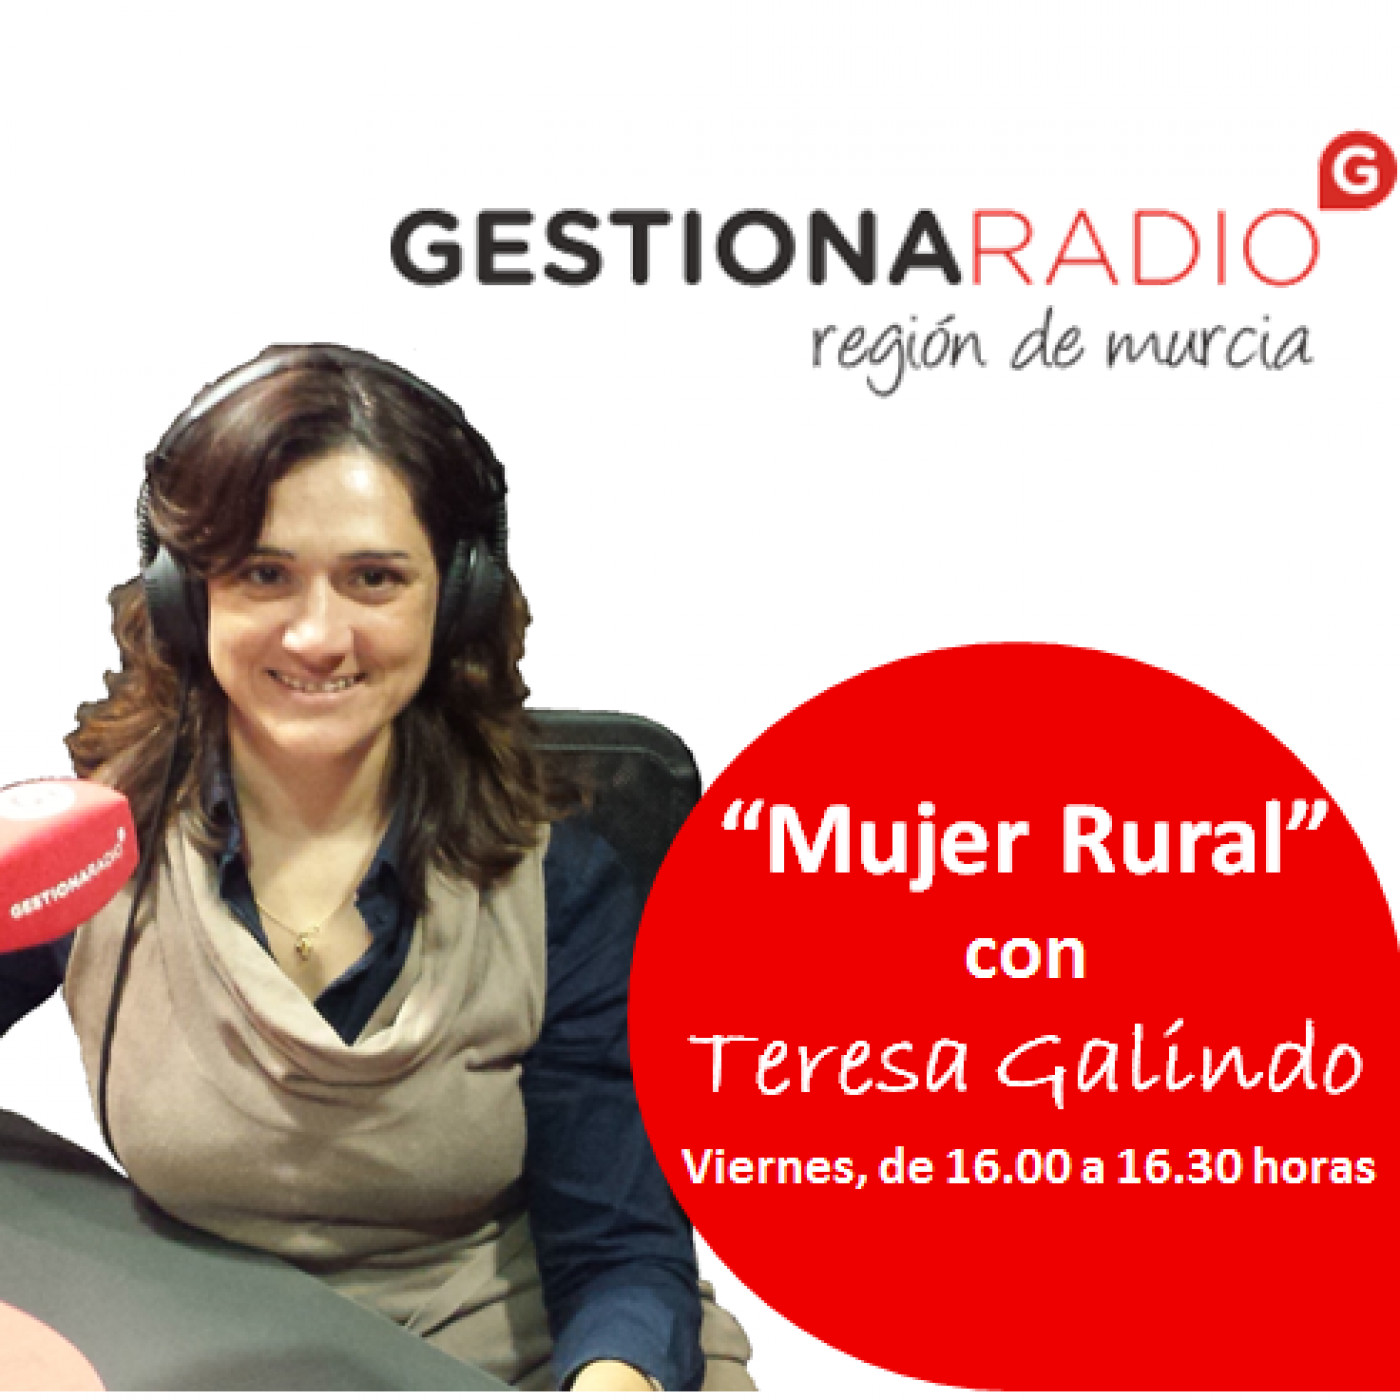 Impermeable perder Puno Mujer Rural en Gestiona radio Región de Murcia - Podcast en iVoox